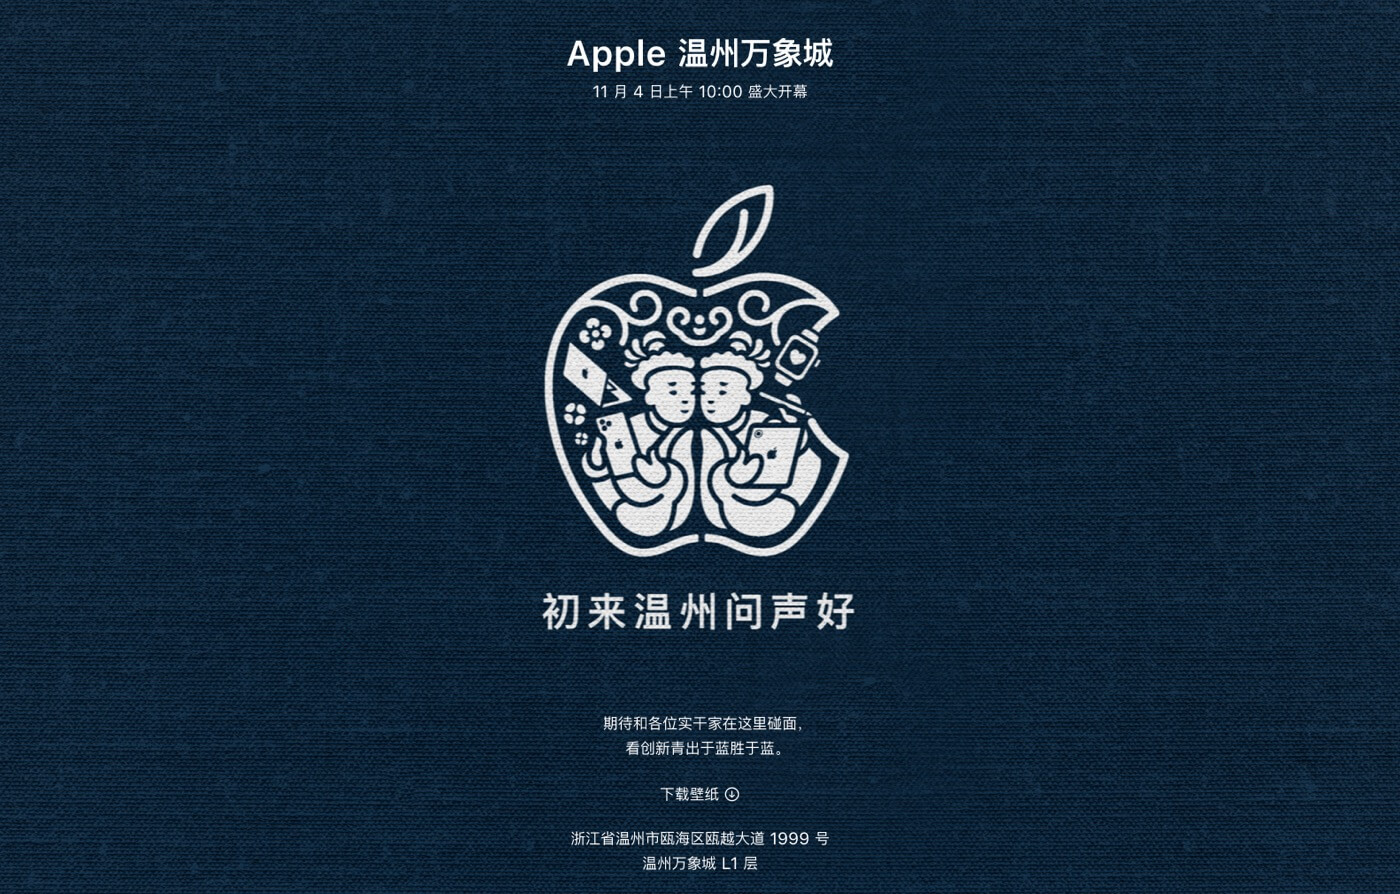 Apple、11月4日に中国の浙江省温州市に新しい直営店｢Apple 温州万象城｣をオープンへ ｰ オリジナル壁紙も配布中